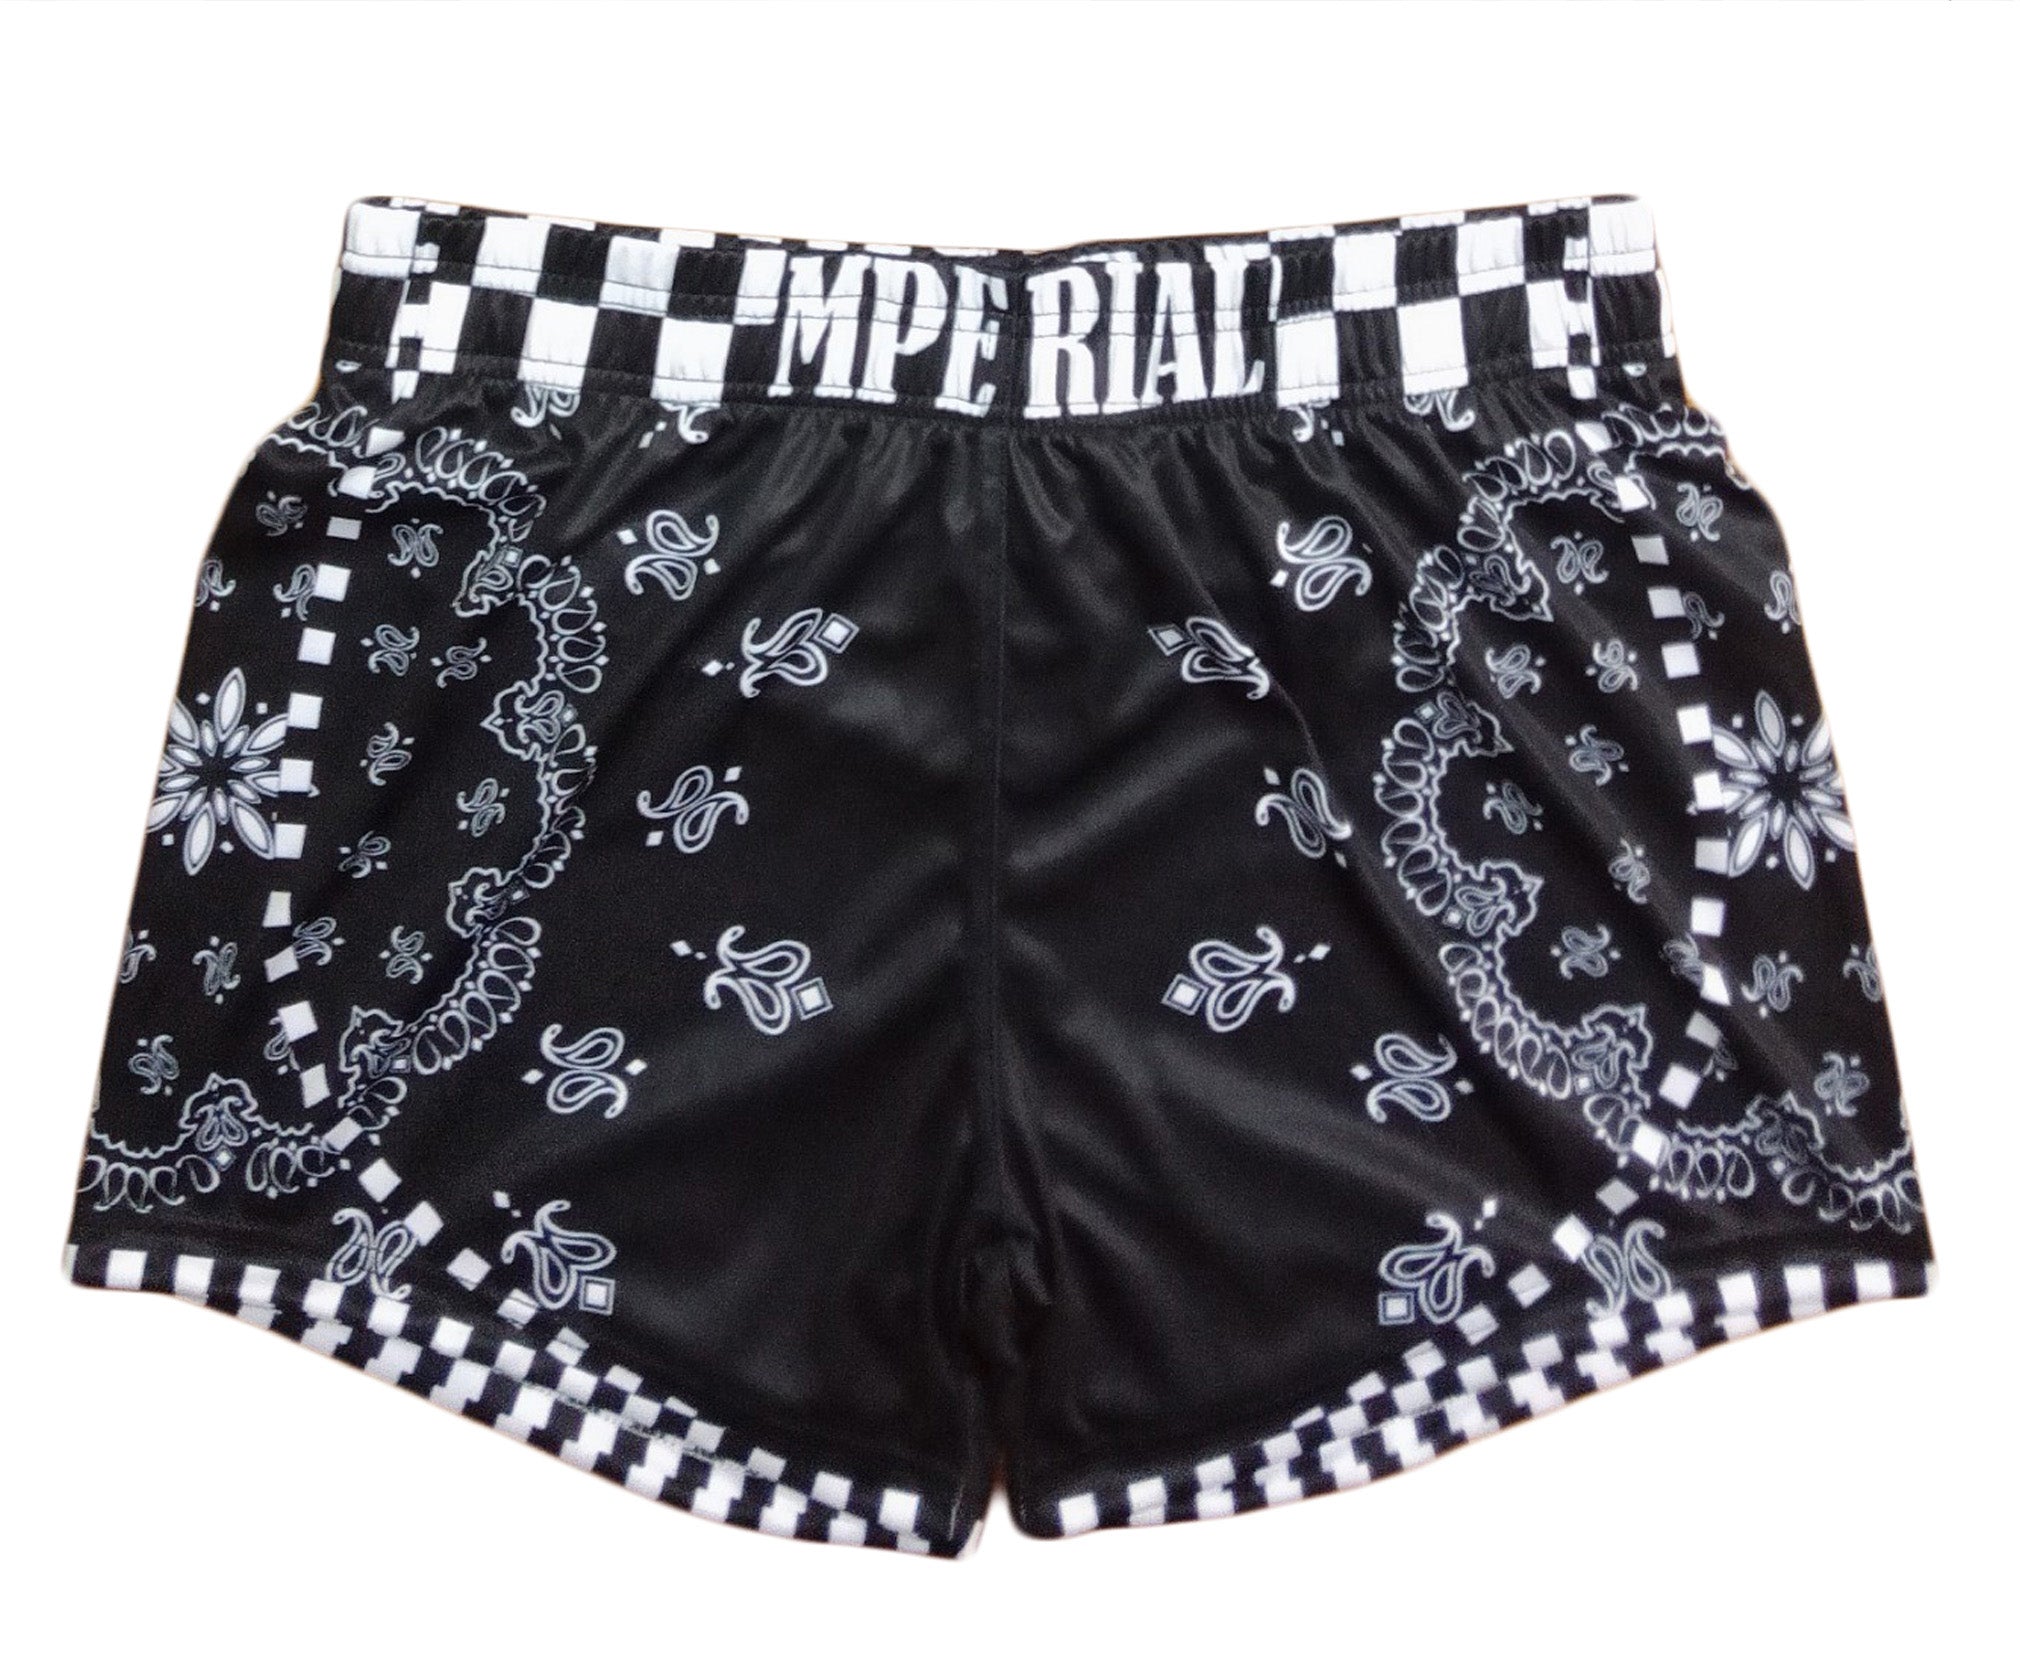 Mperial Bandana Ladies Shorts (black)